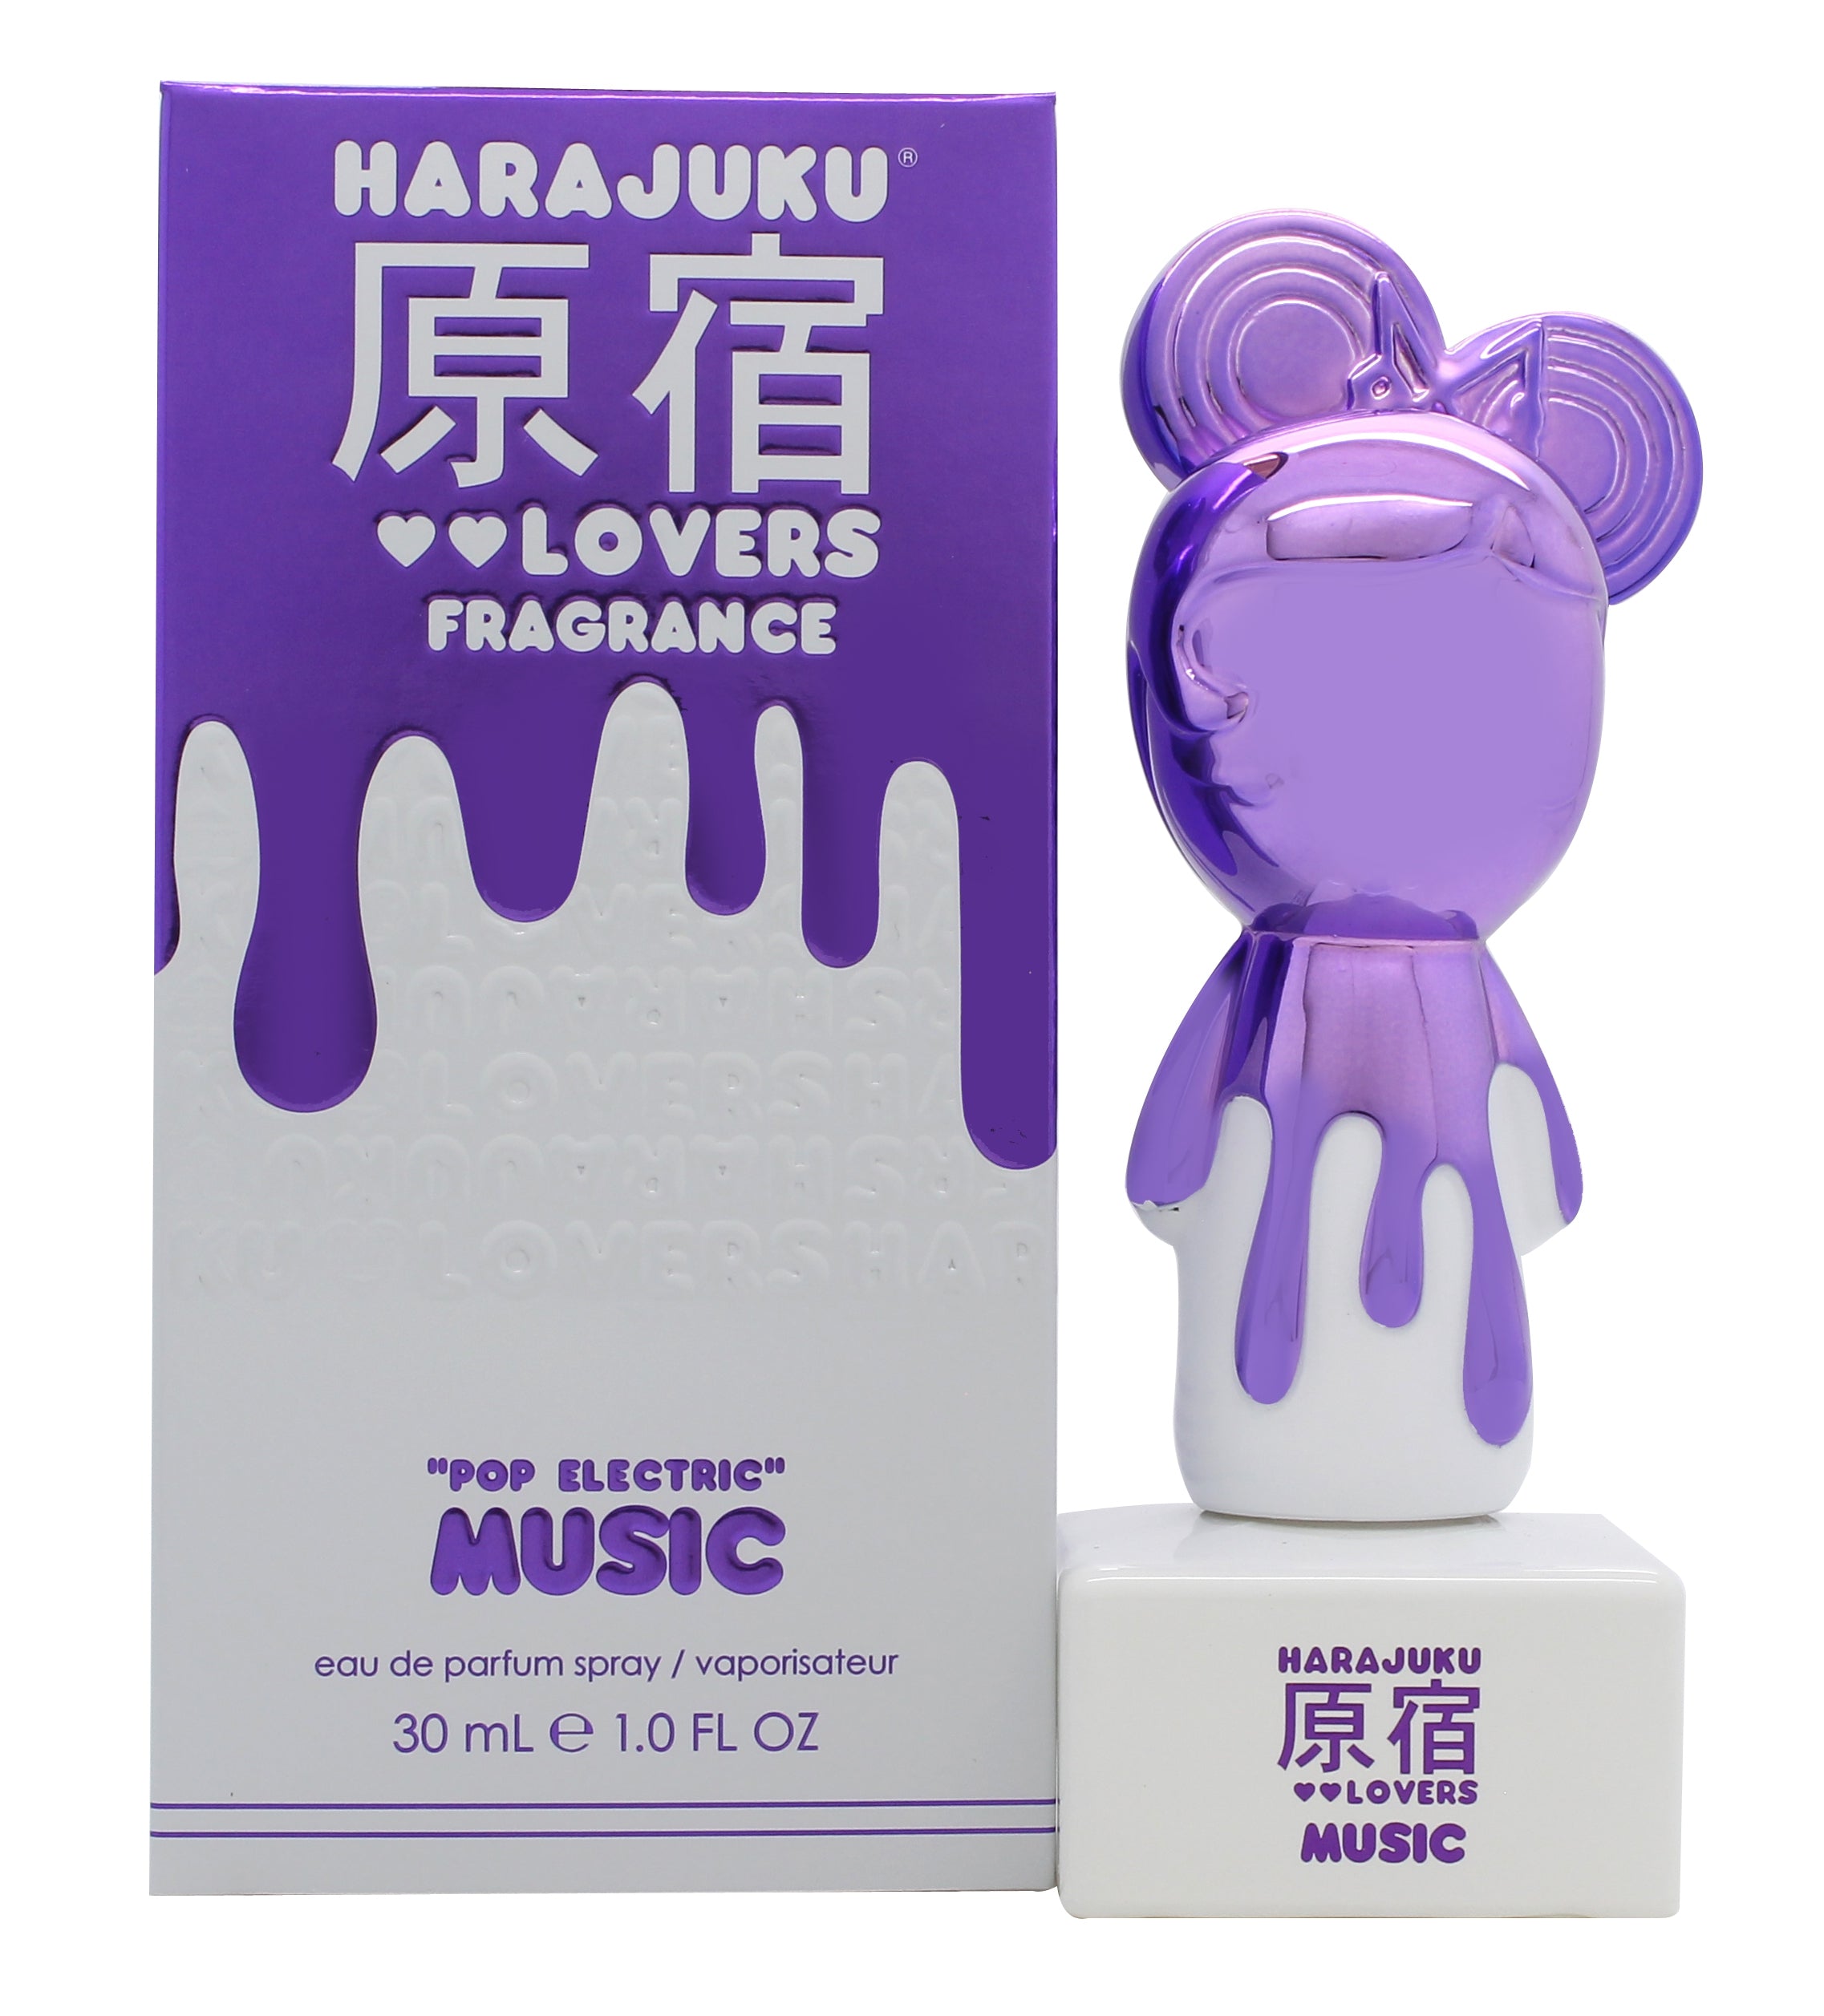 View Gwen Stefani Harajuku Lovers Pop Electric Music Eau De Parfum 30ml Spray information